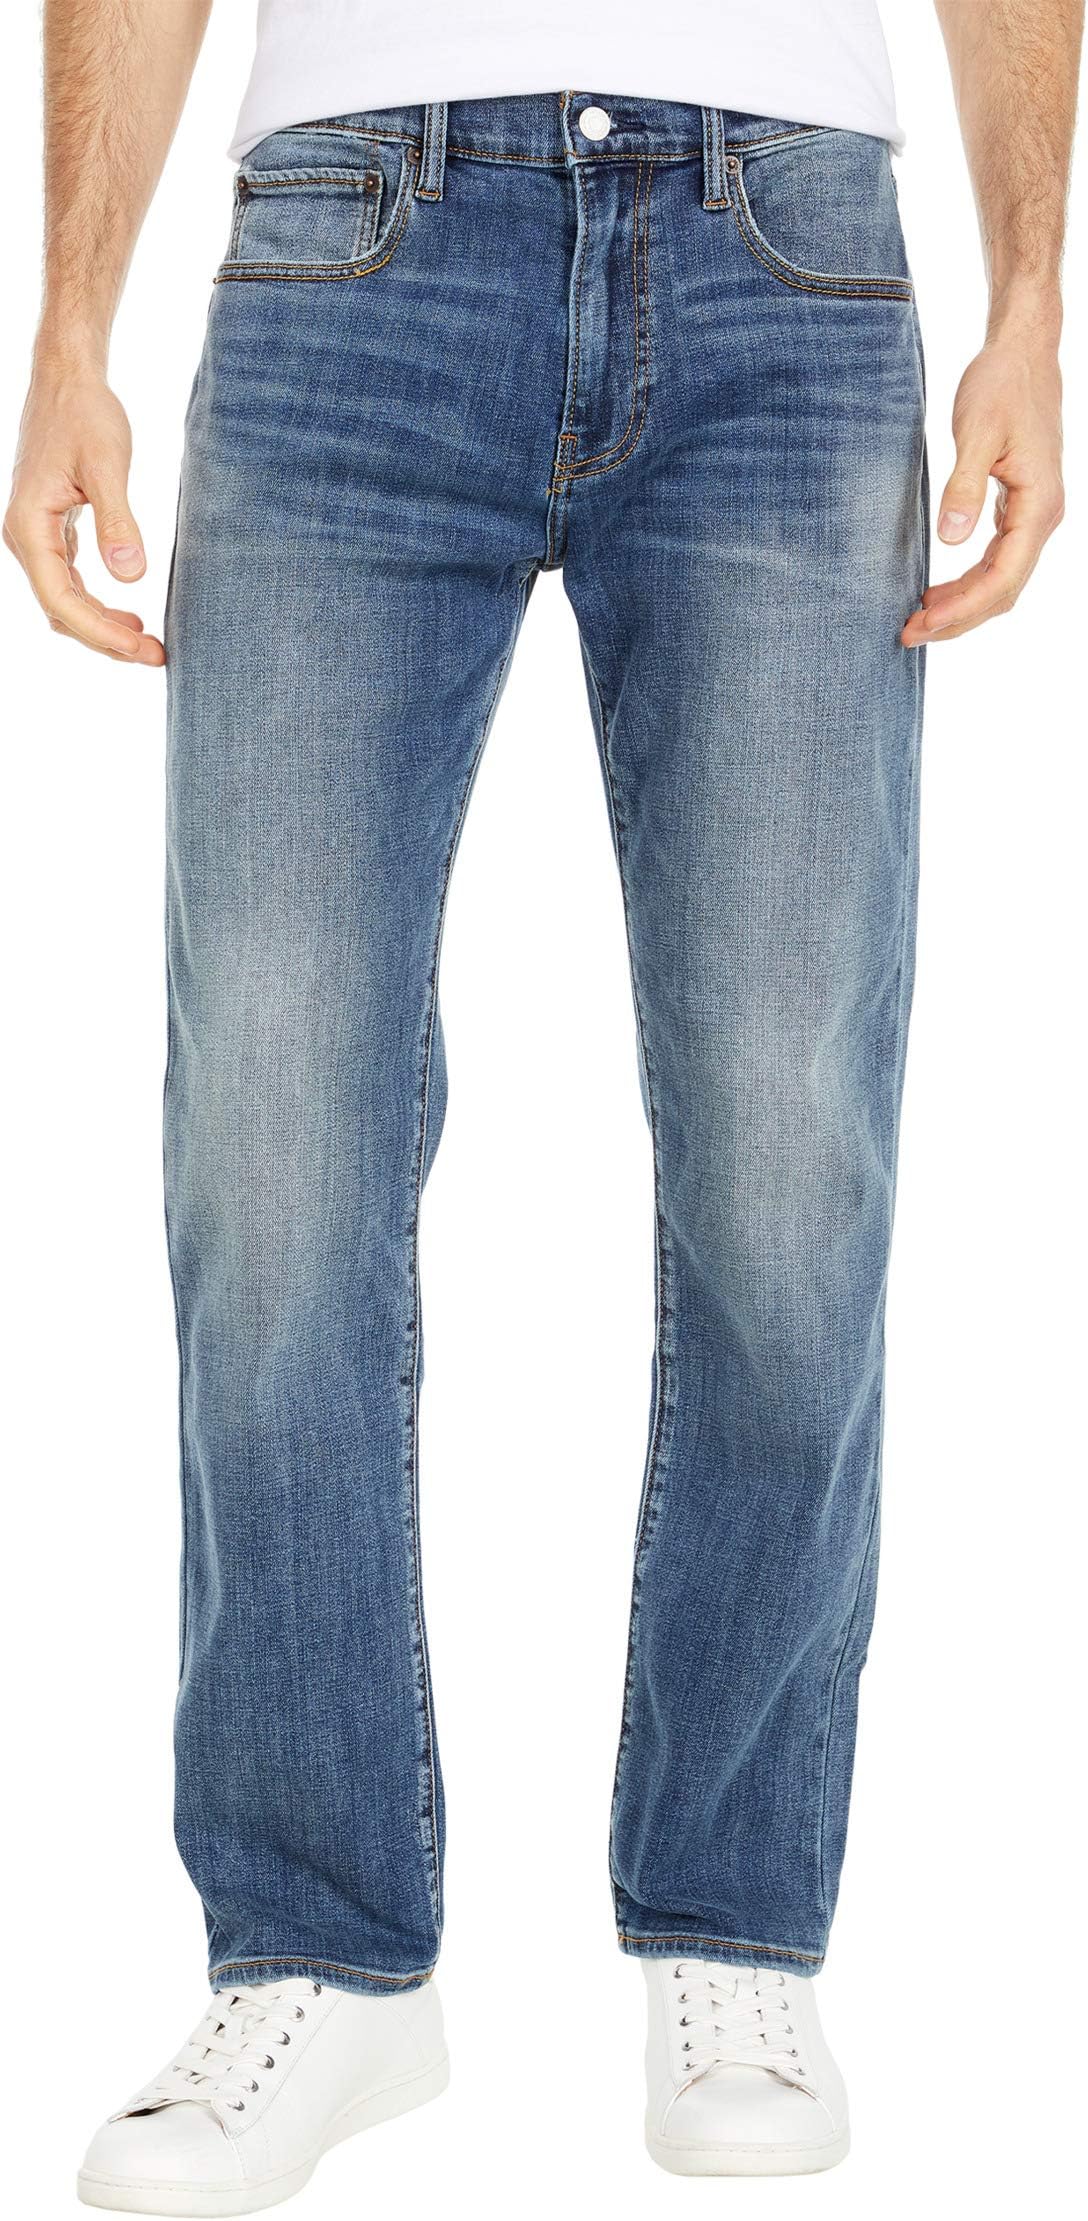 Джинсы 223 Straight Jeans in Harrison Lucky Brand, цвет Harrison george harrison george harrison [lp]